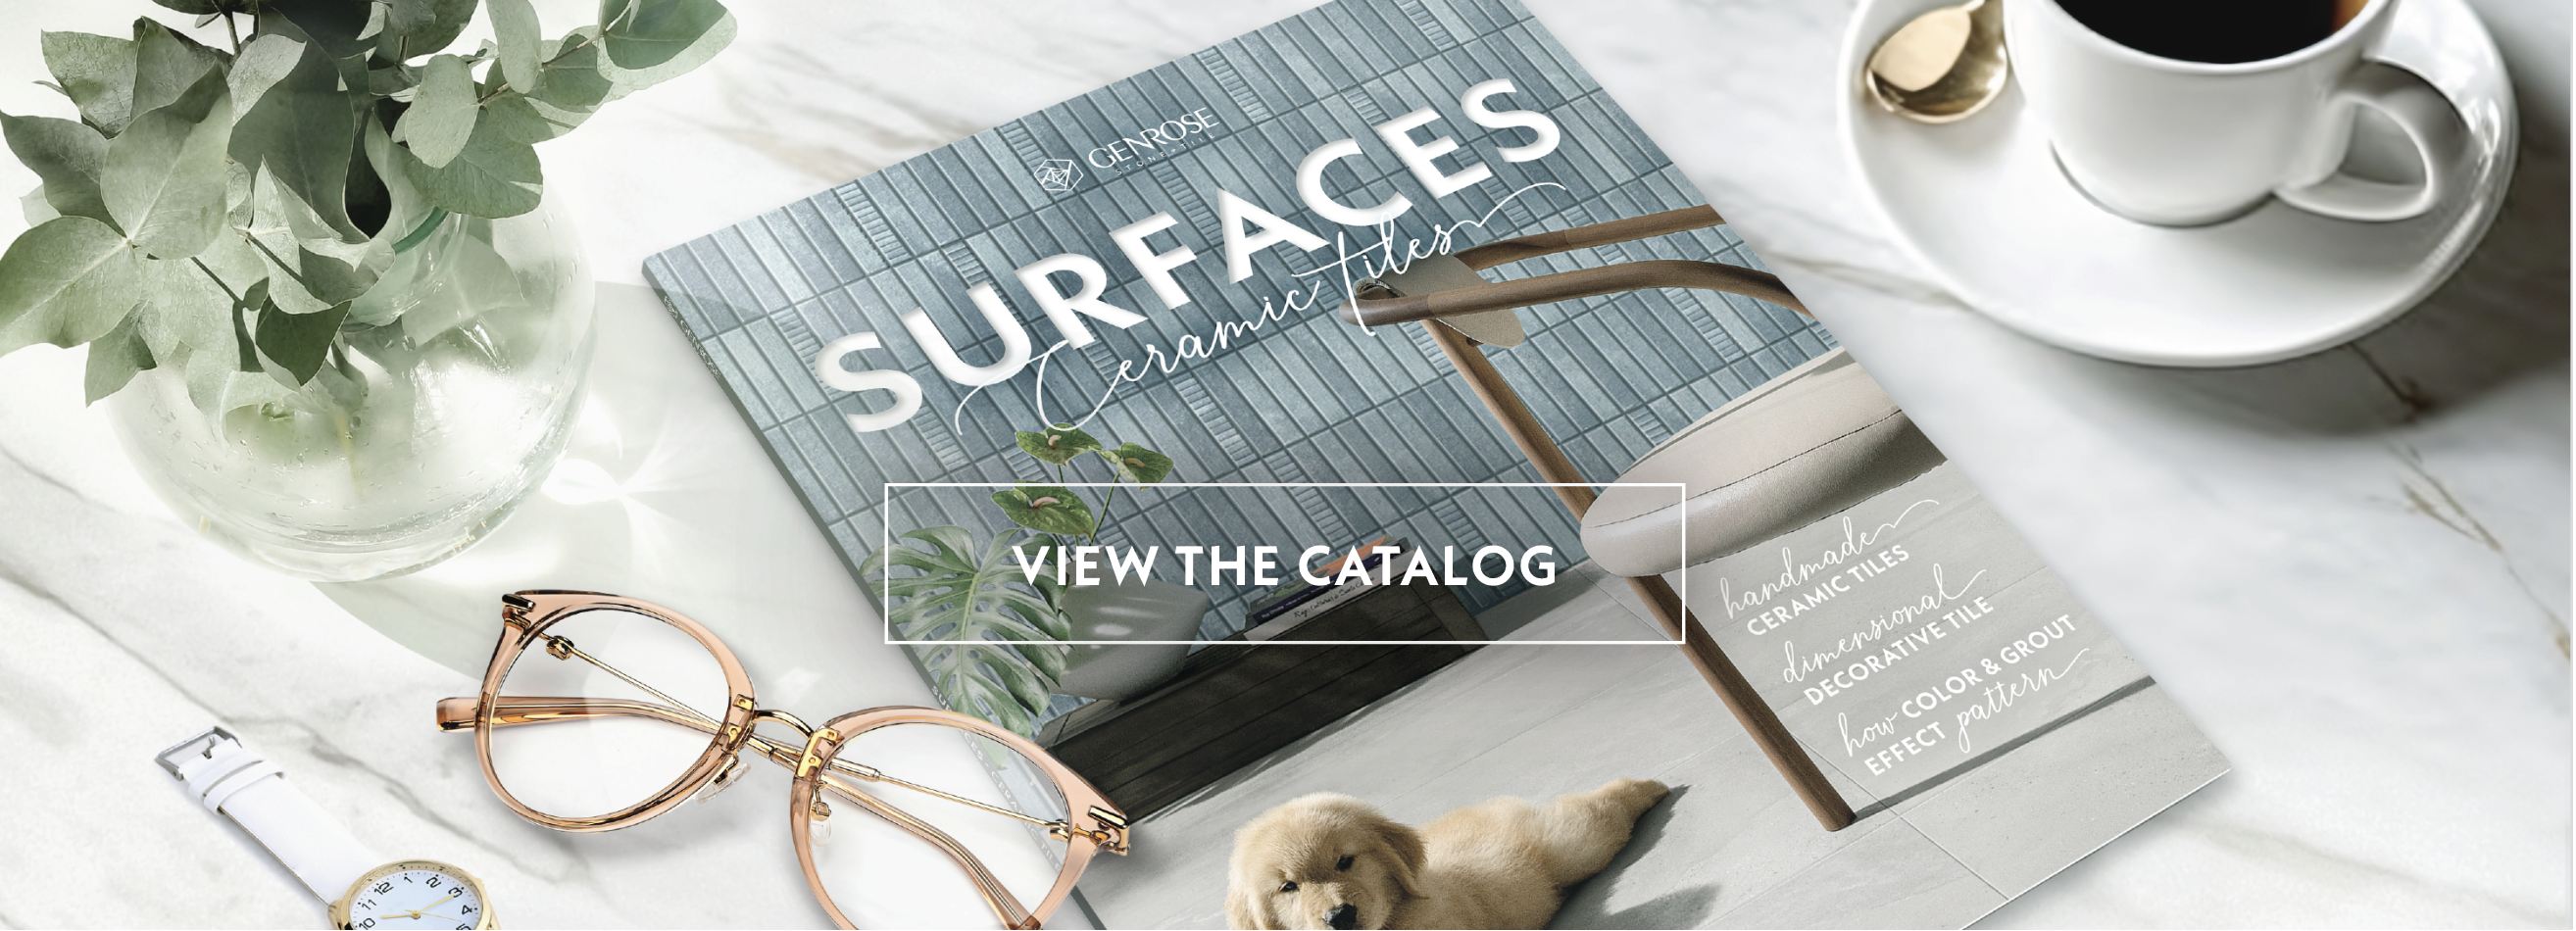 Ceramic Tile Surfaces Catalog